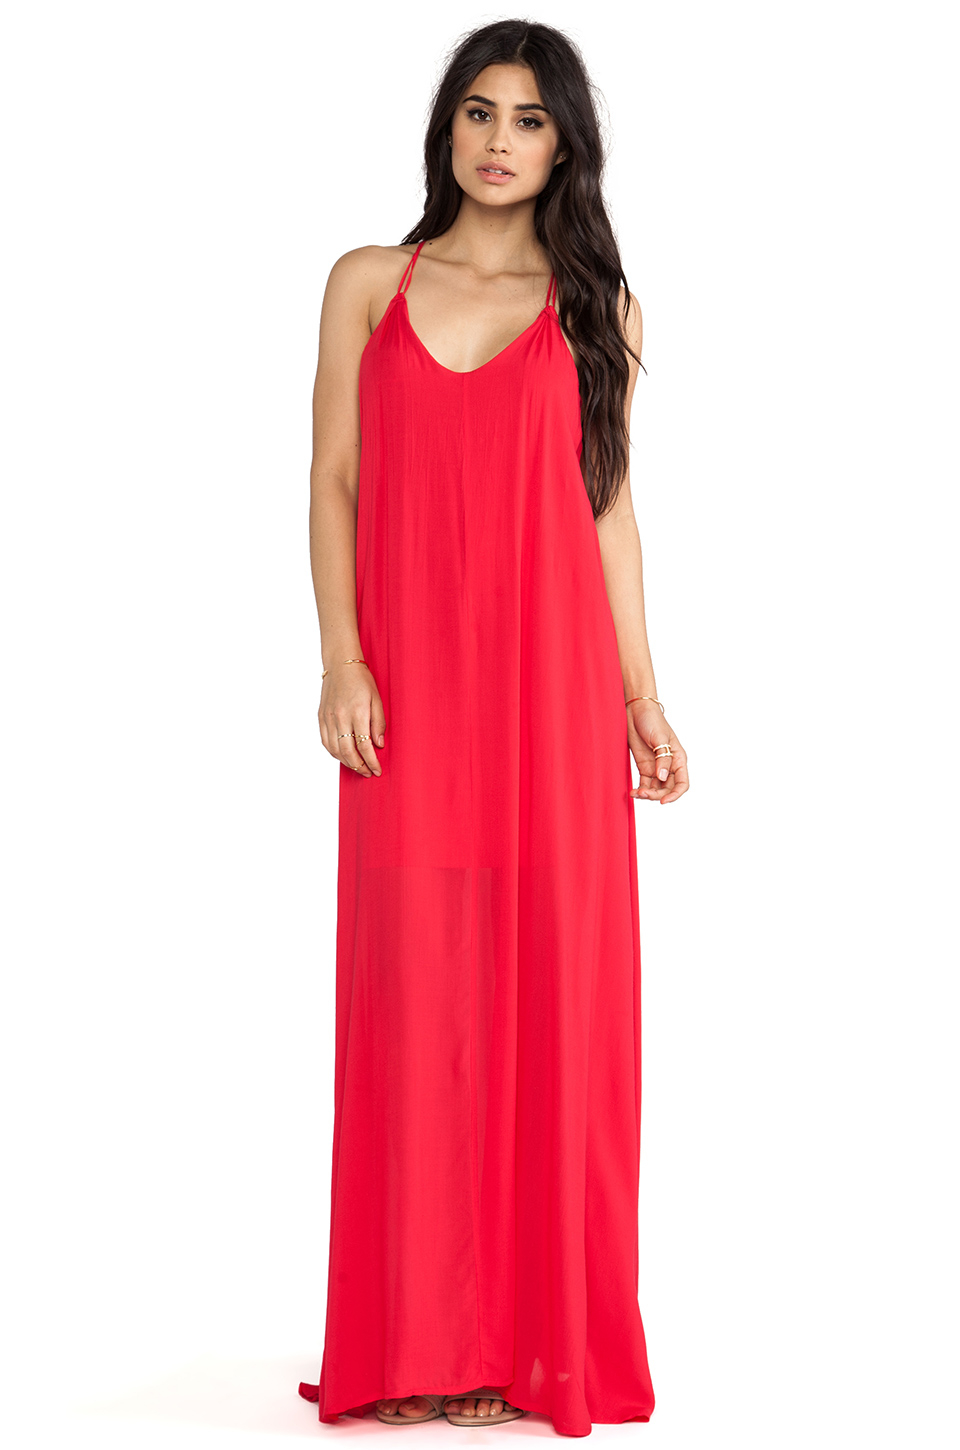 Lyst - Bella Luxx Trapeze Maxi Dress in Red